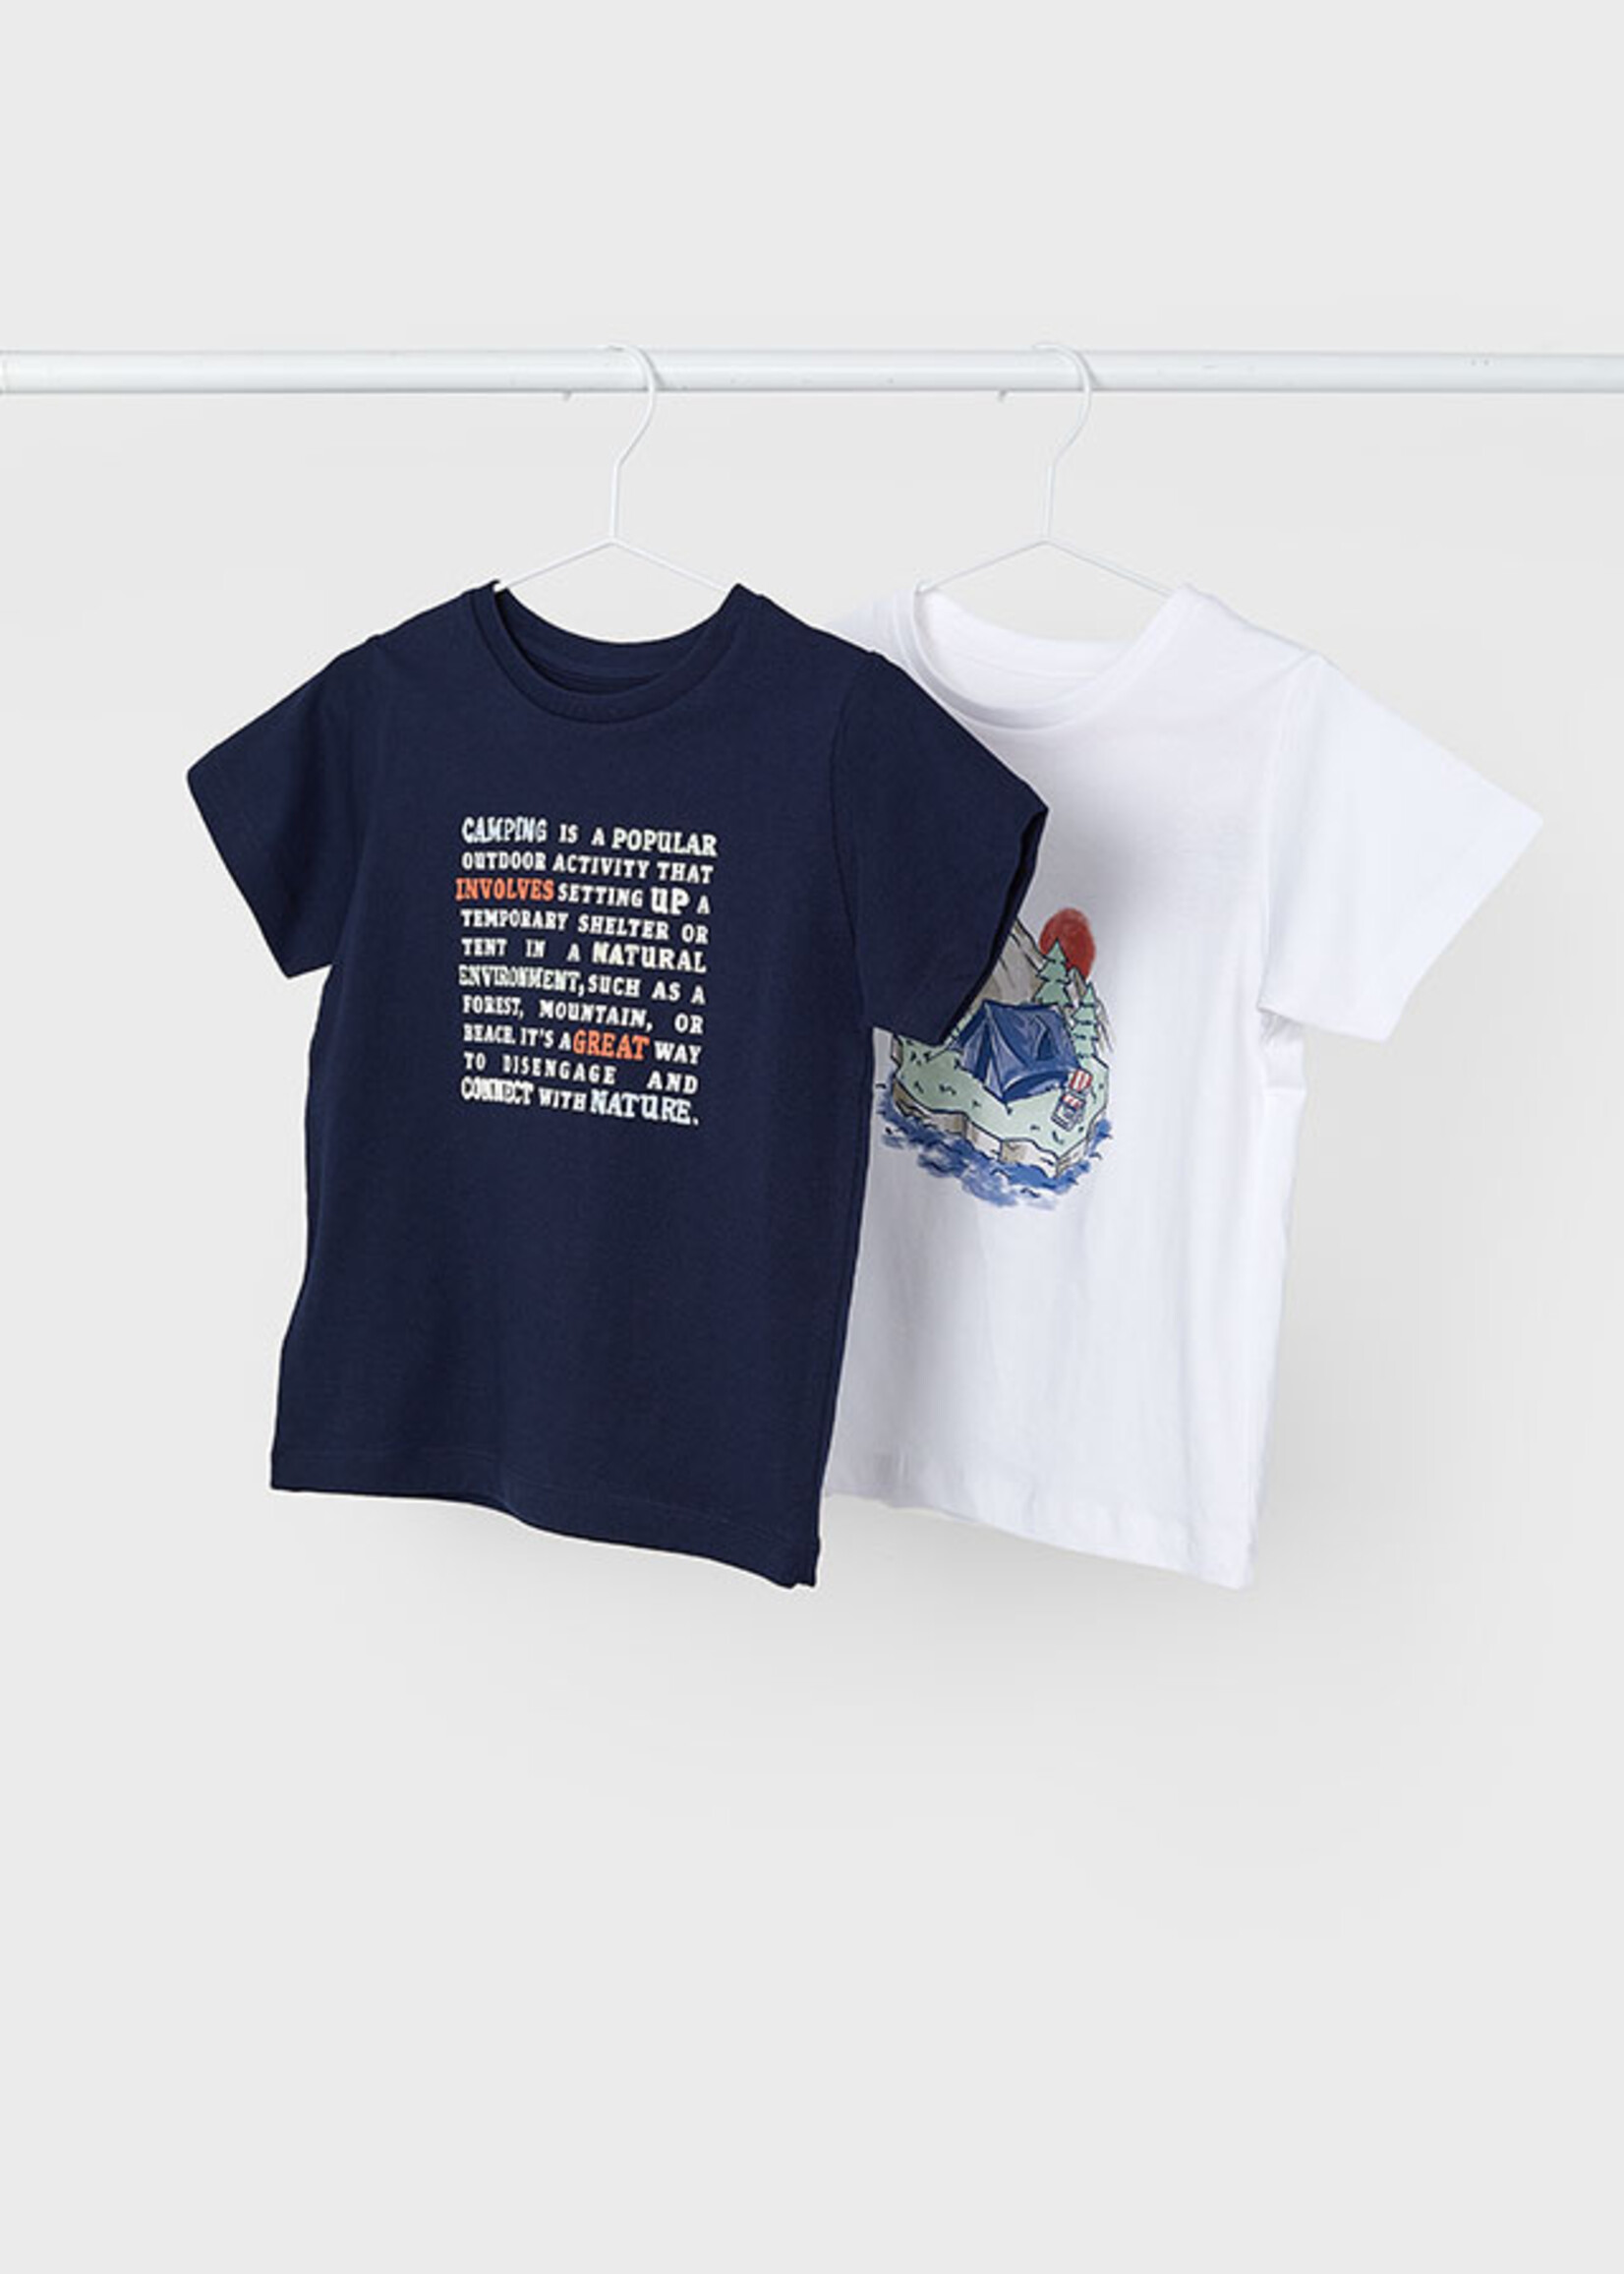 Mayoral Mini Boy             3005 2 S/s t-shirts set            Navy